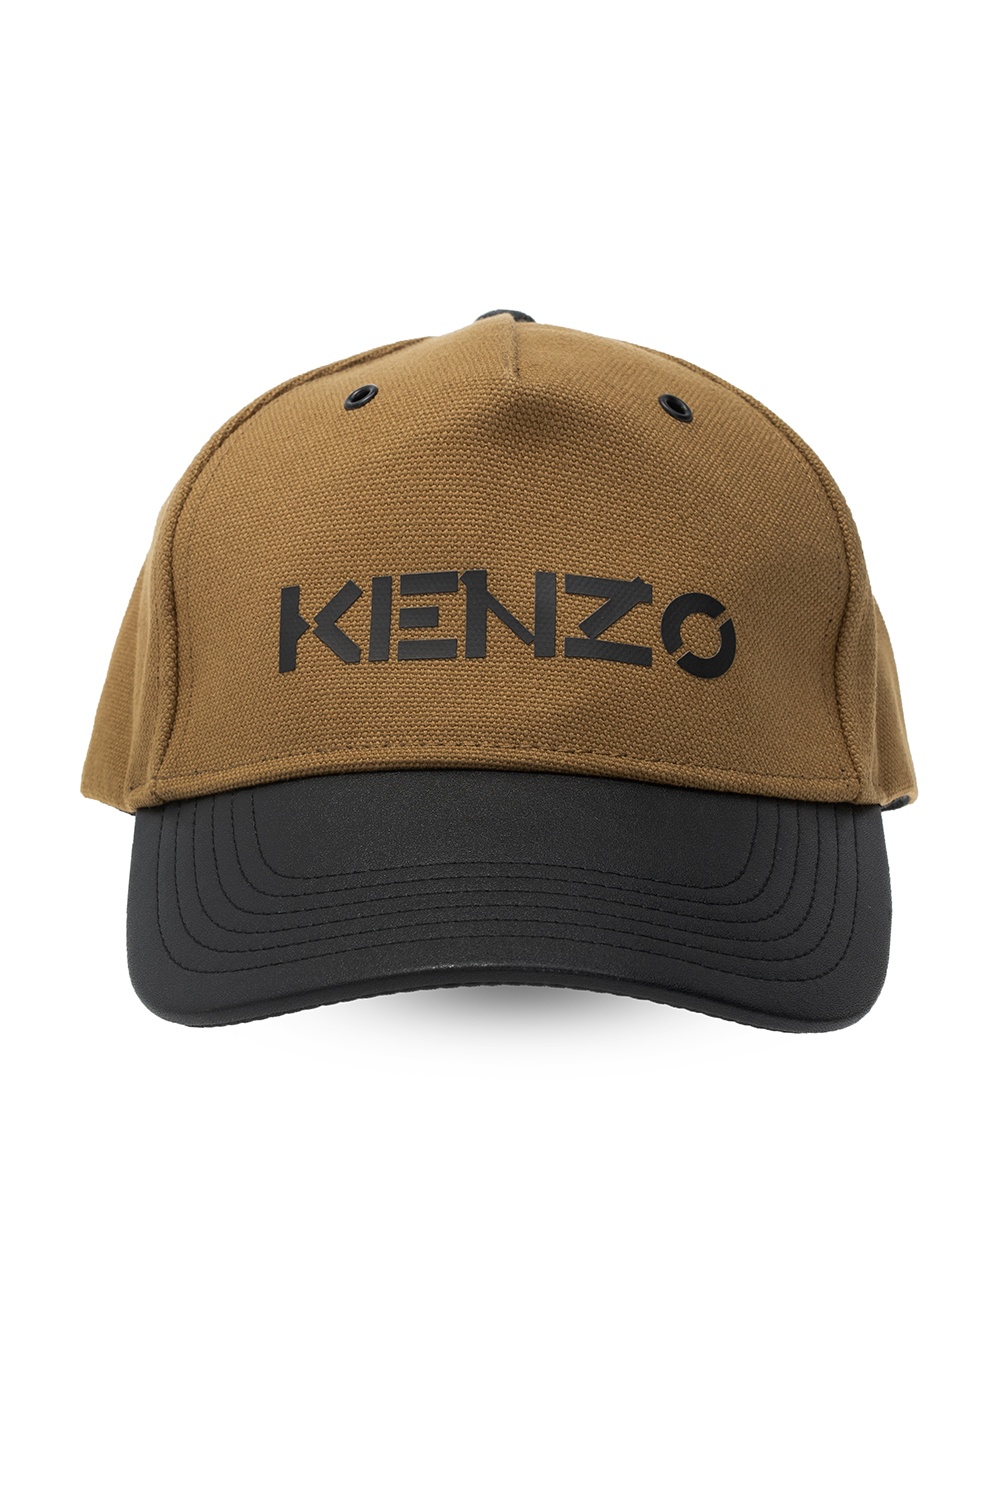 boys kenzo hat